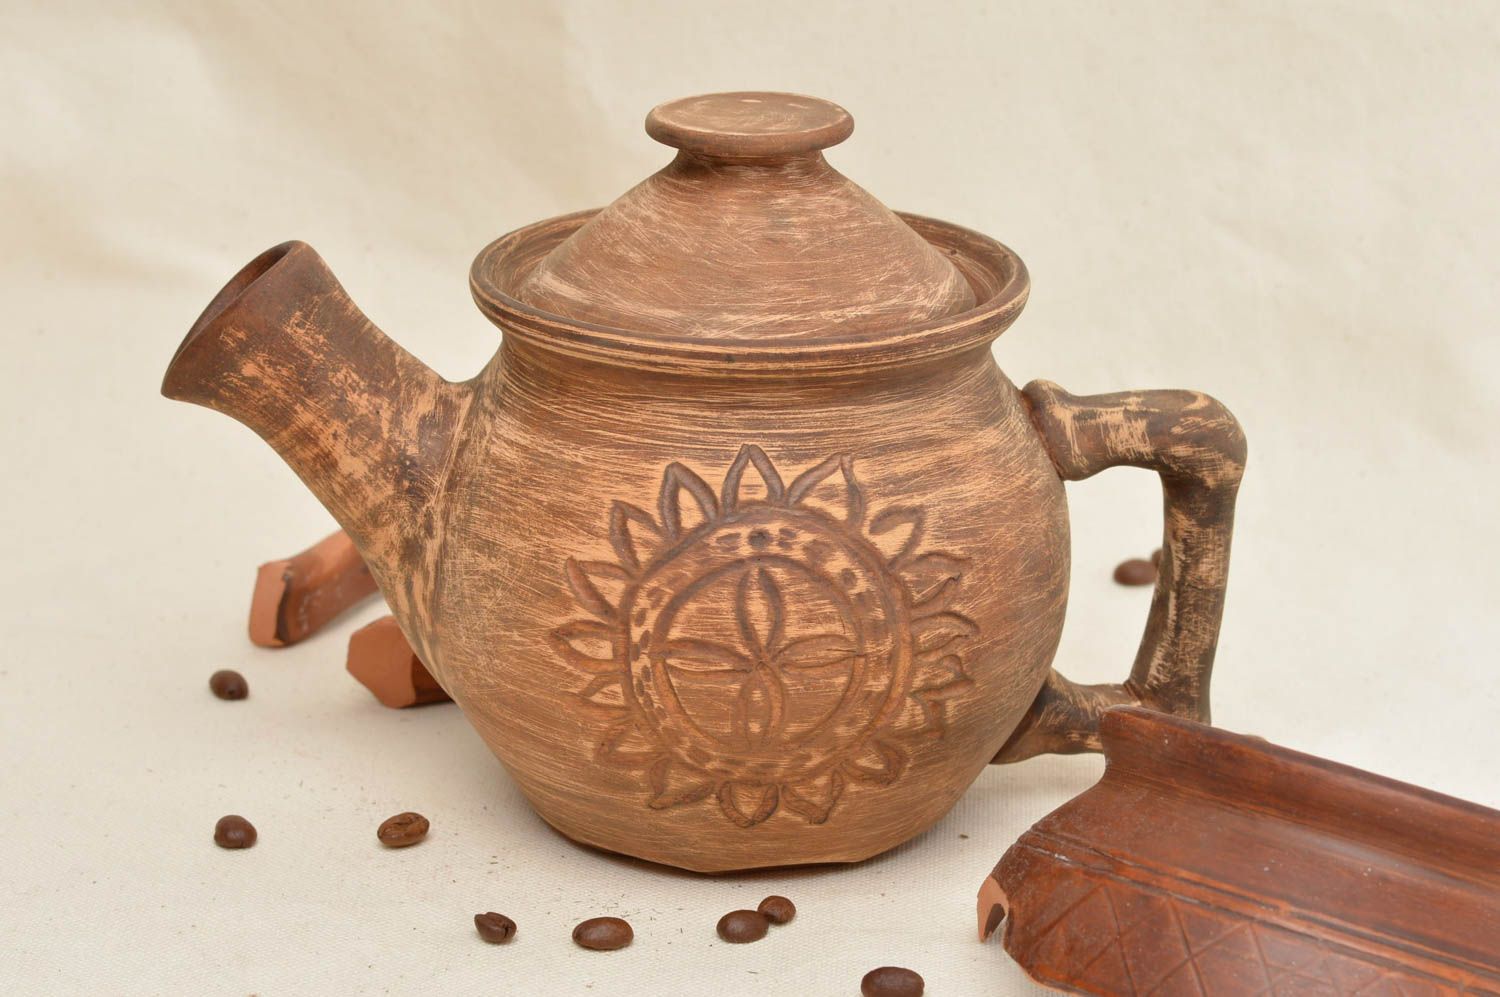 Unusual handmade ceramic teapot designer clay teapot table setting ideas photo 1